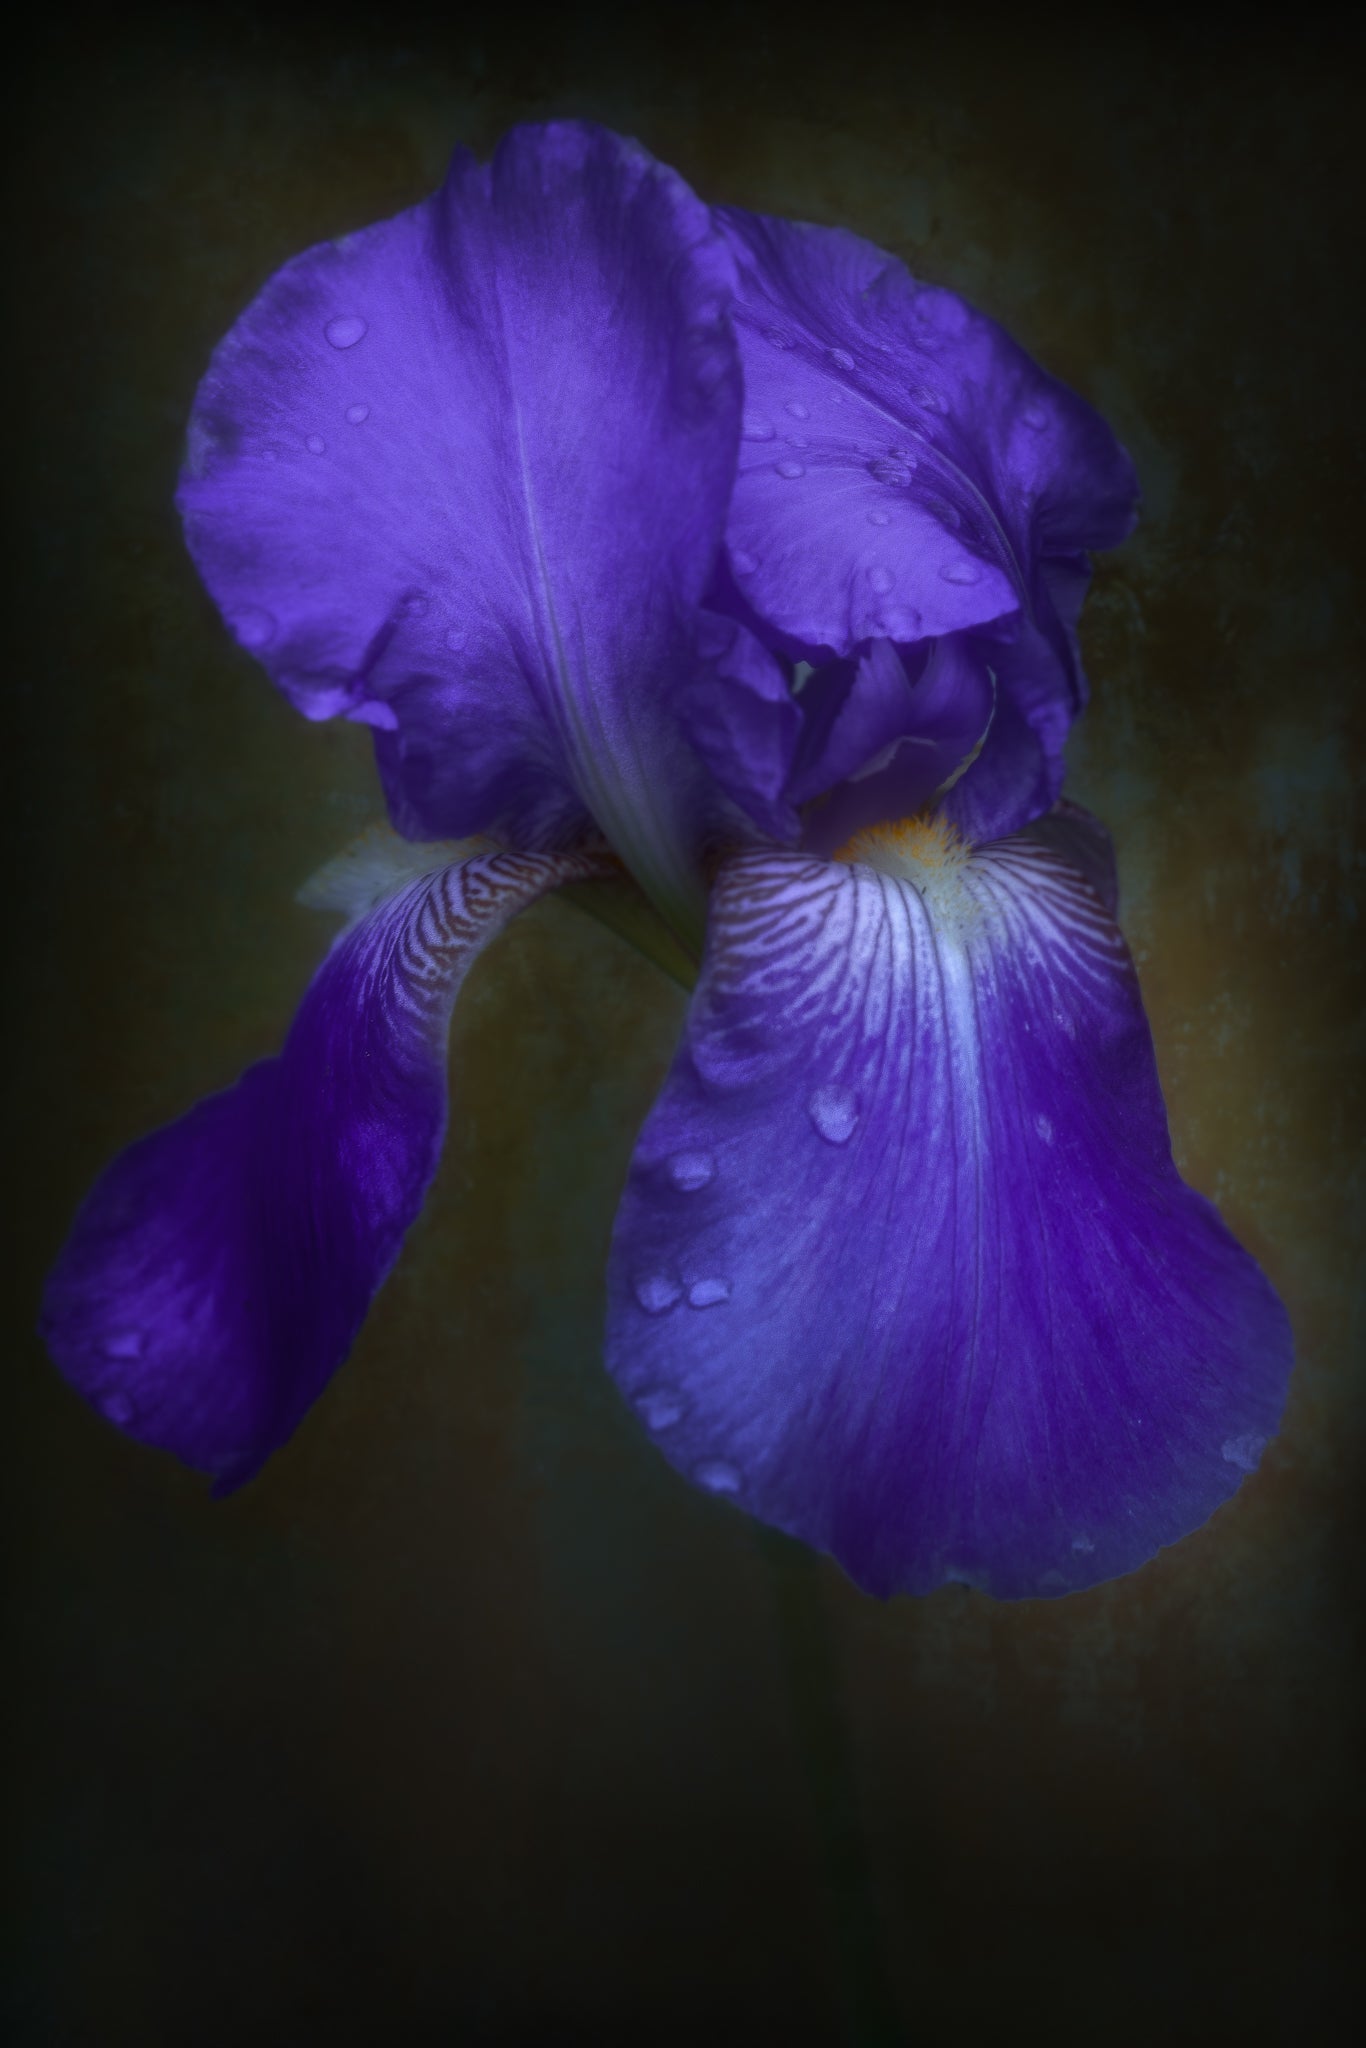 Fine art photograph of an Iris flower titled "Righteous" by Cameron Dreaux of Dreaux Fine Art. 